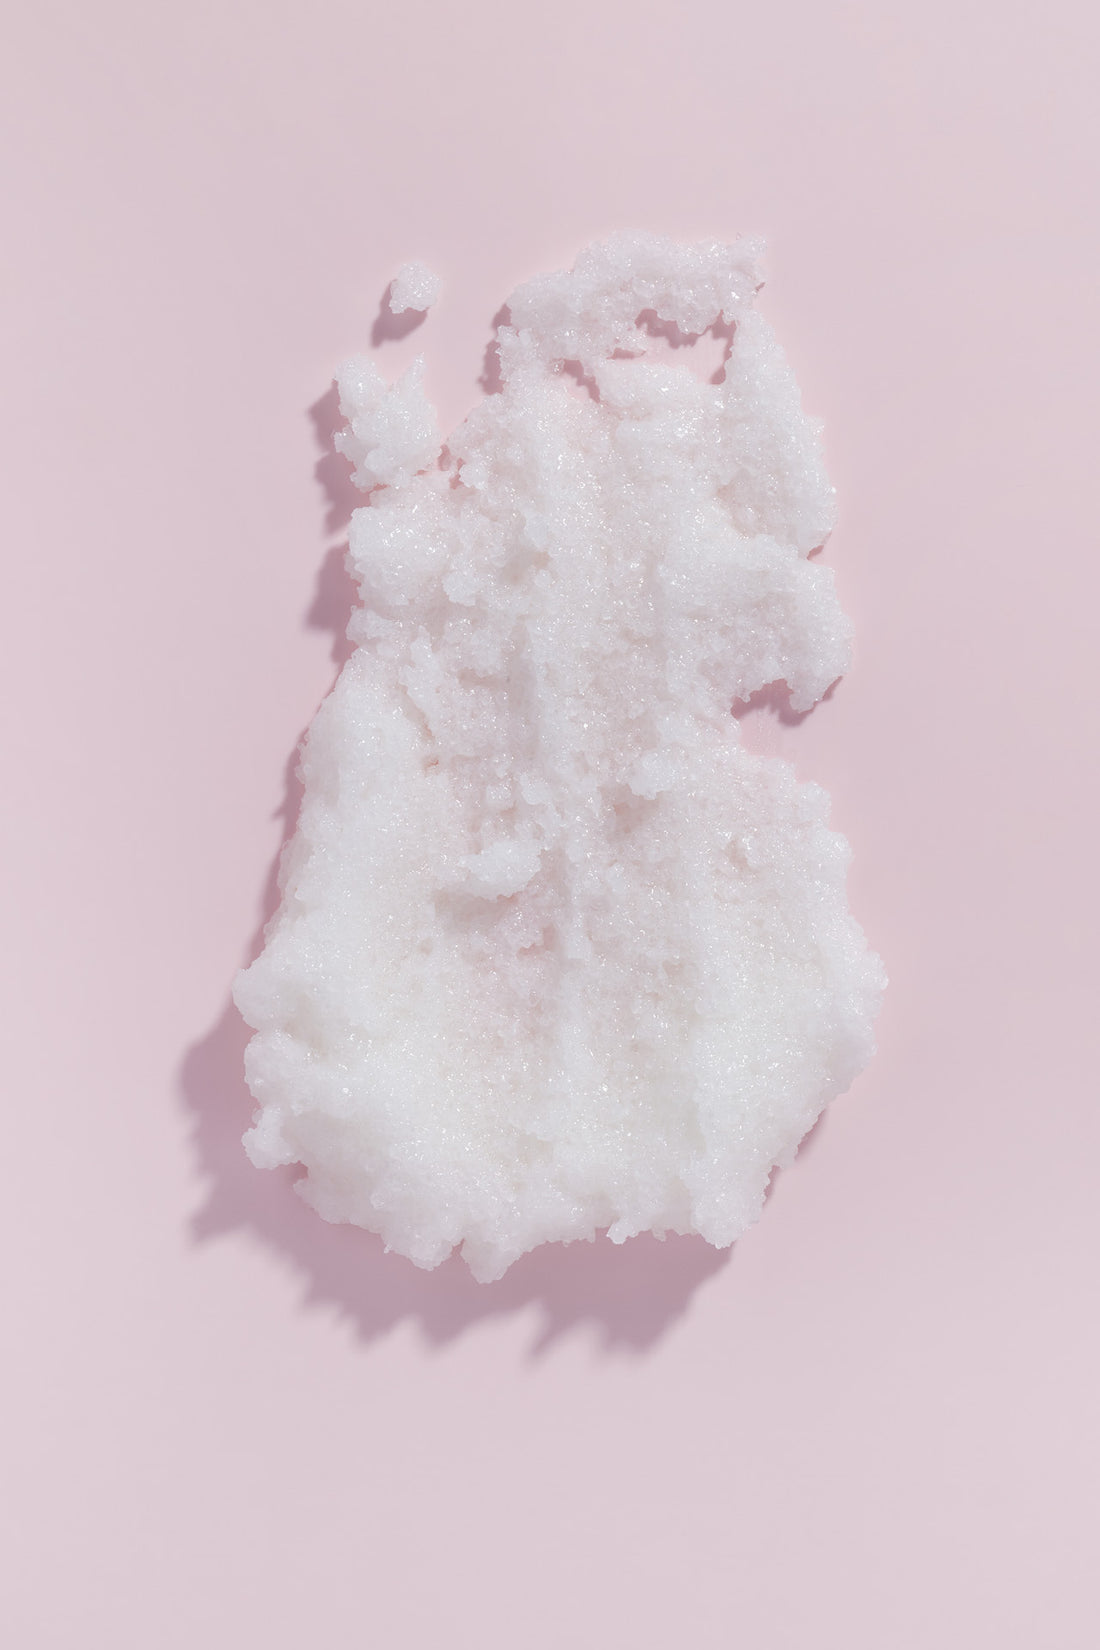 salt polish on light pink background